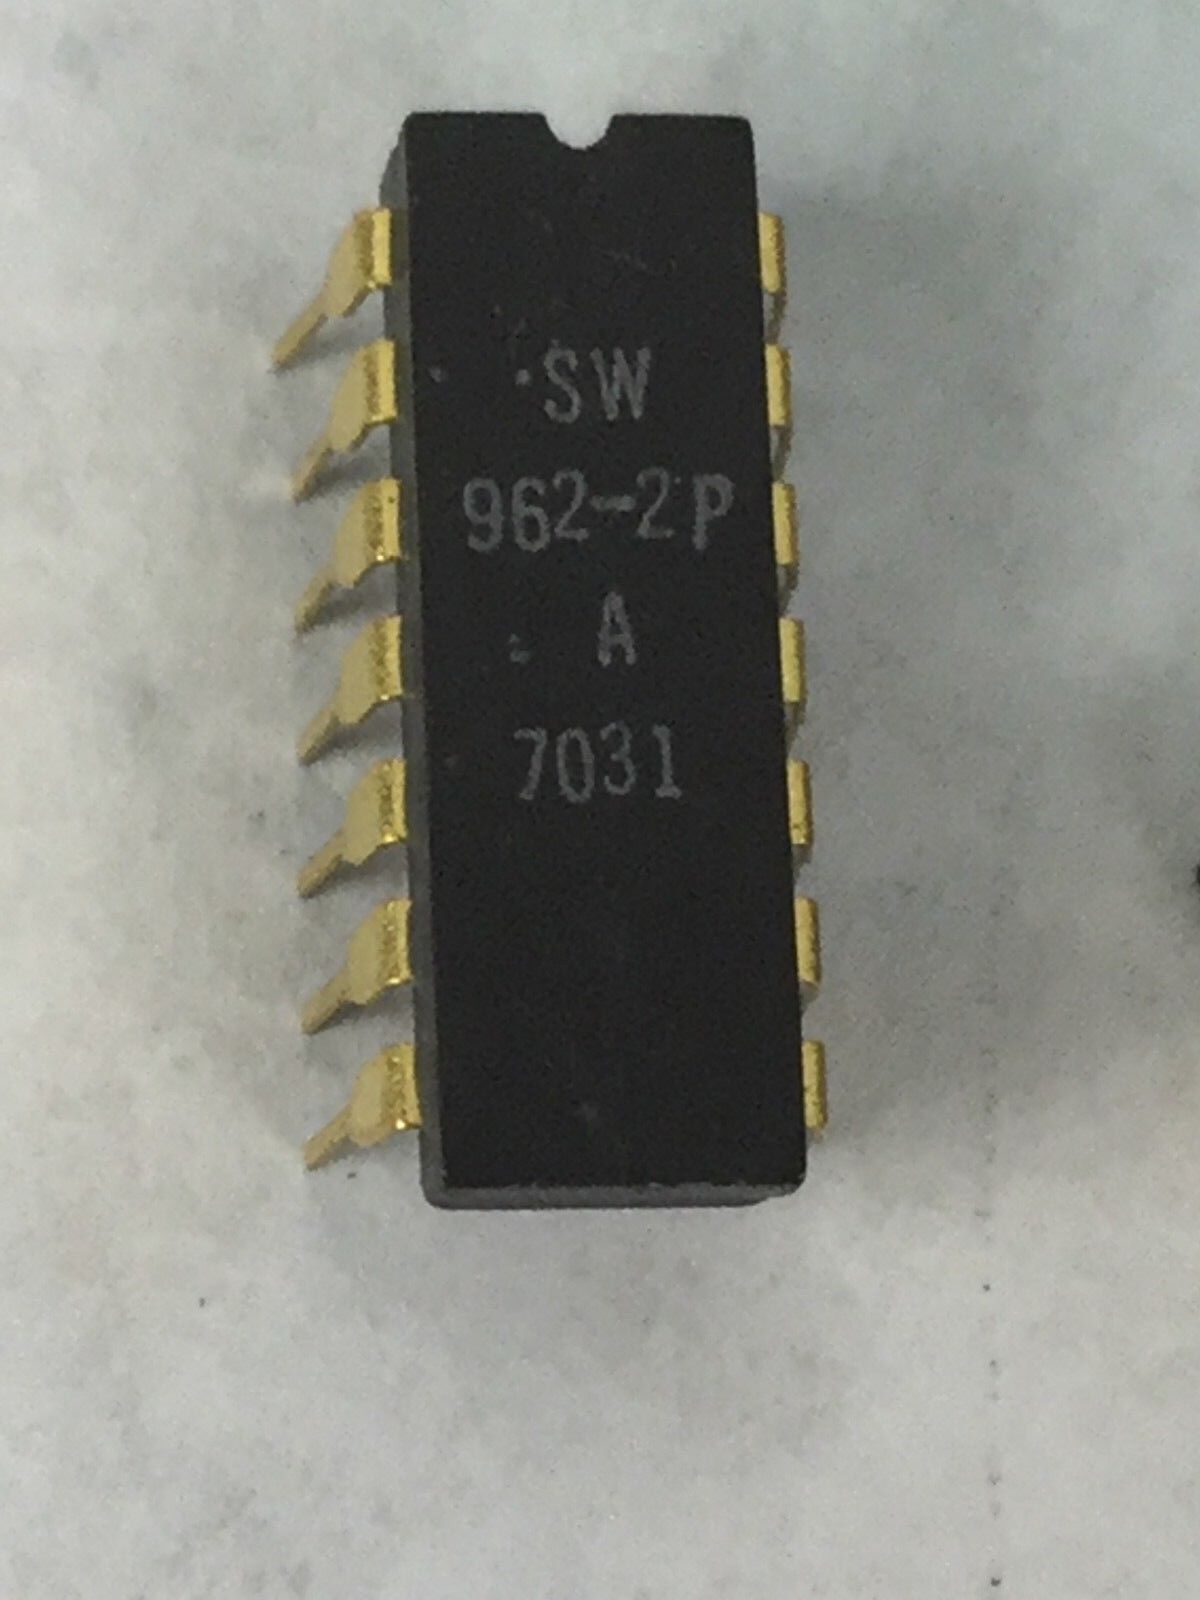 NEW SW 962-2P STEWART WARNER  Lot of 9  14 Pin Gold Dip